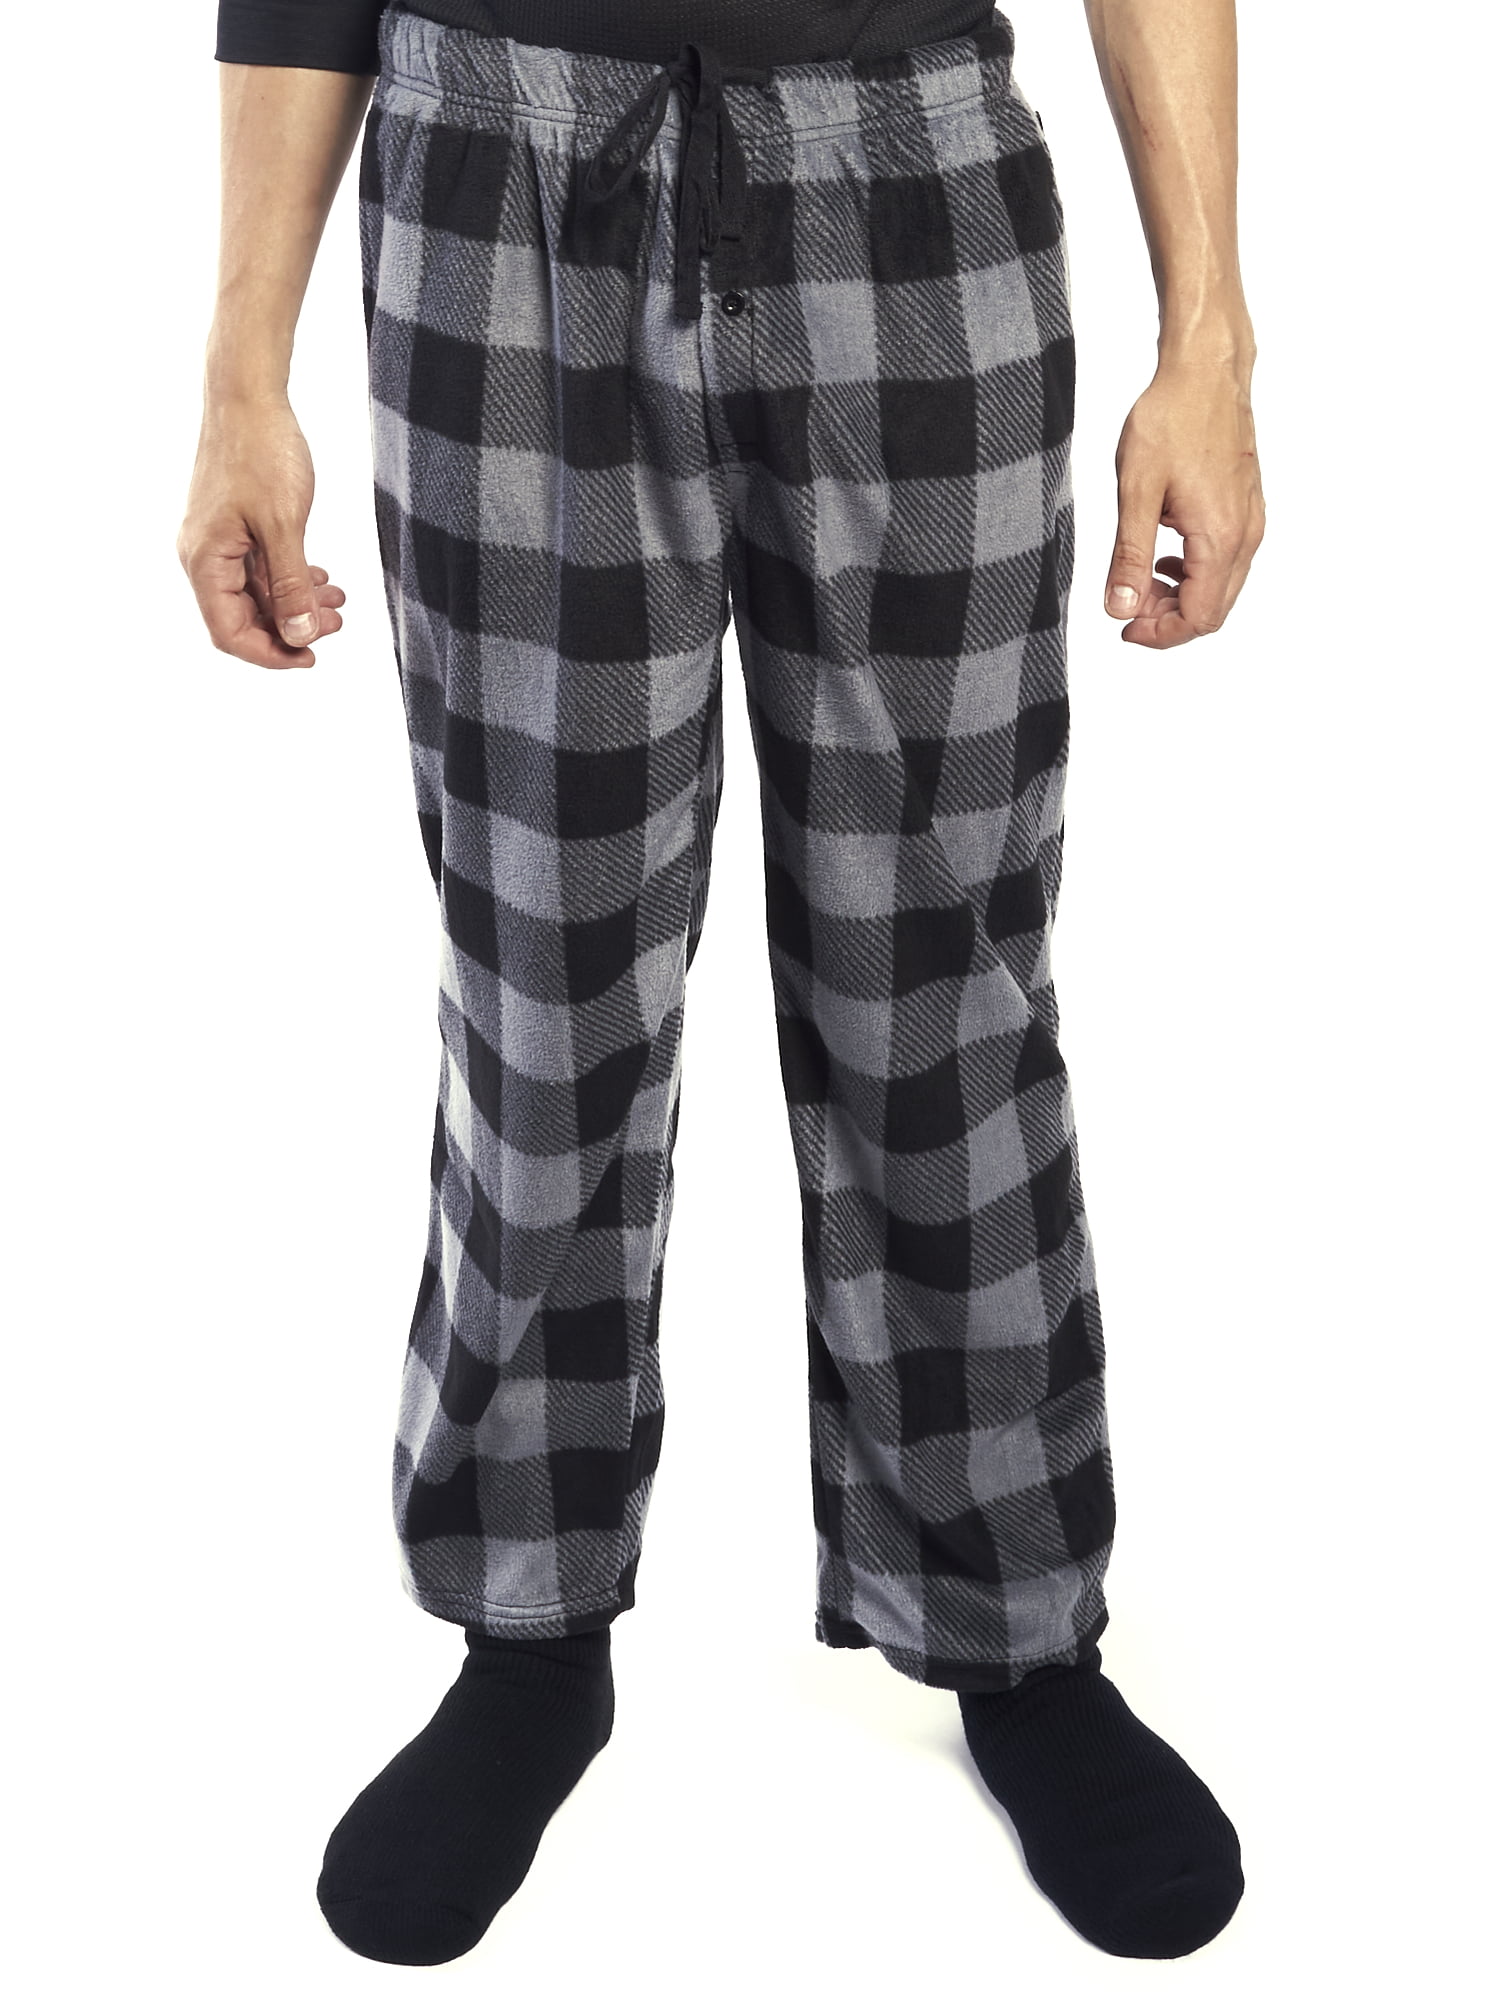 DG Hill - DG Hill Mens Pajama Pants Lounge Fleece Bottoms with Pockets ...